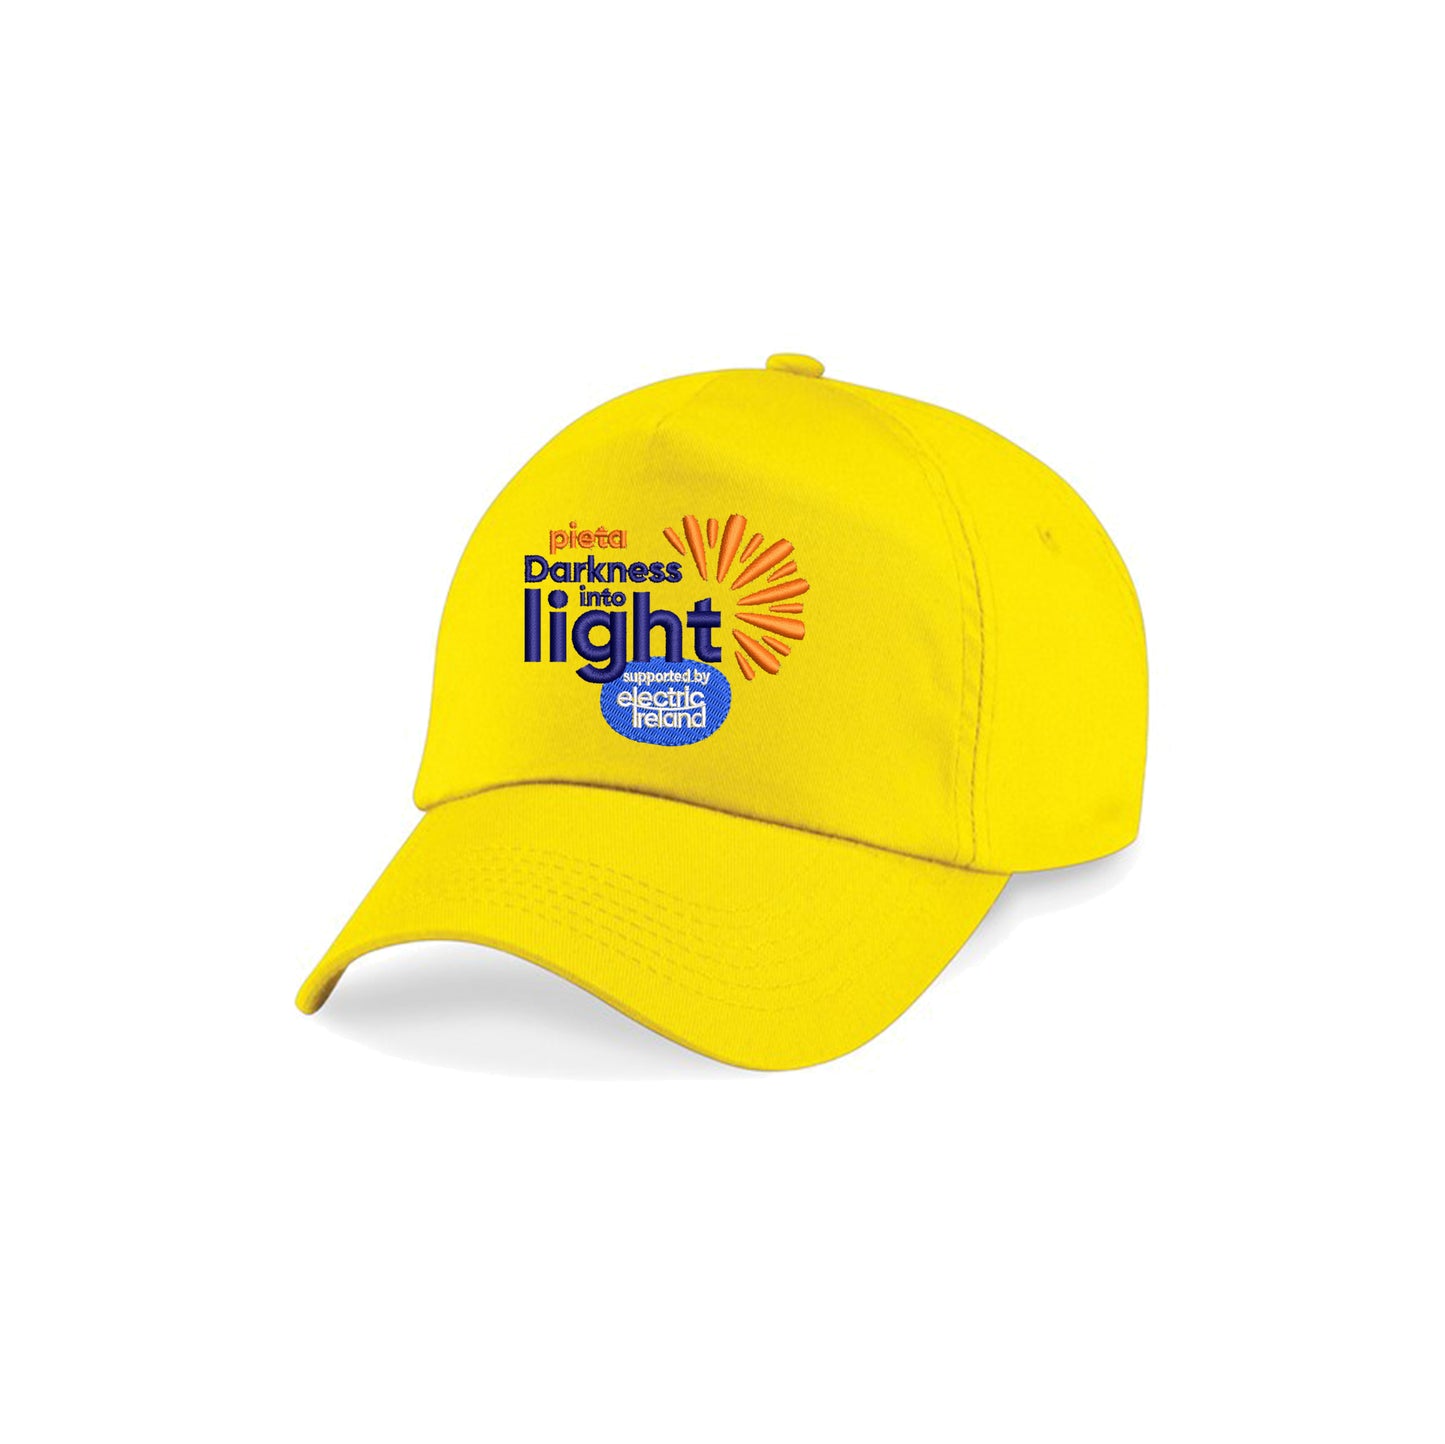 DIL Baseball Cap - Navy or Yellow